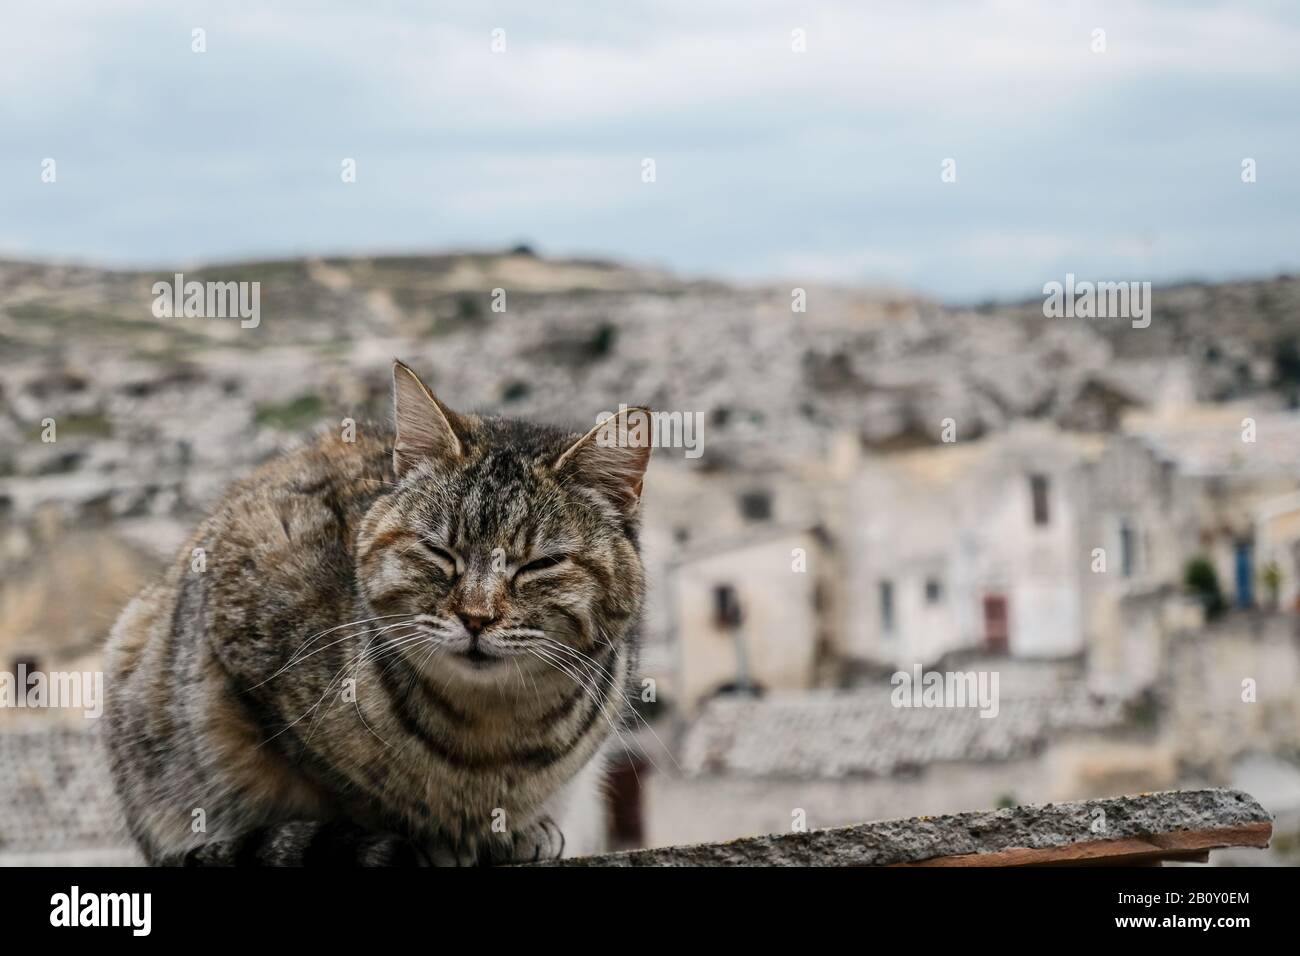 Cute striped wild cat face details portrait on matera city blur background,pets Stock Photo